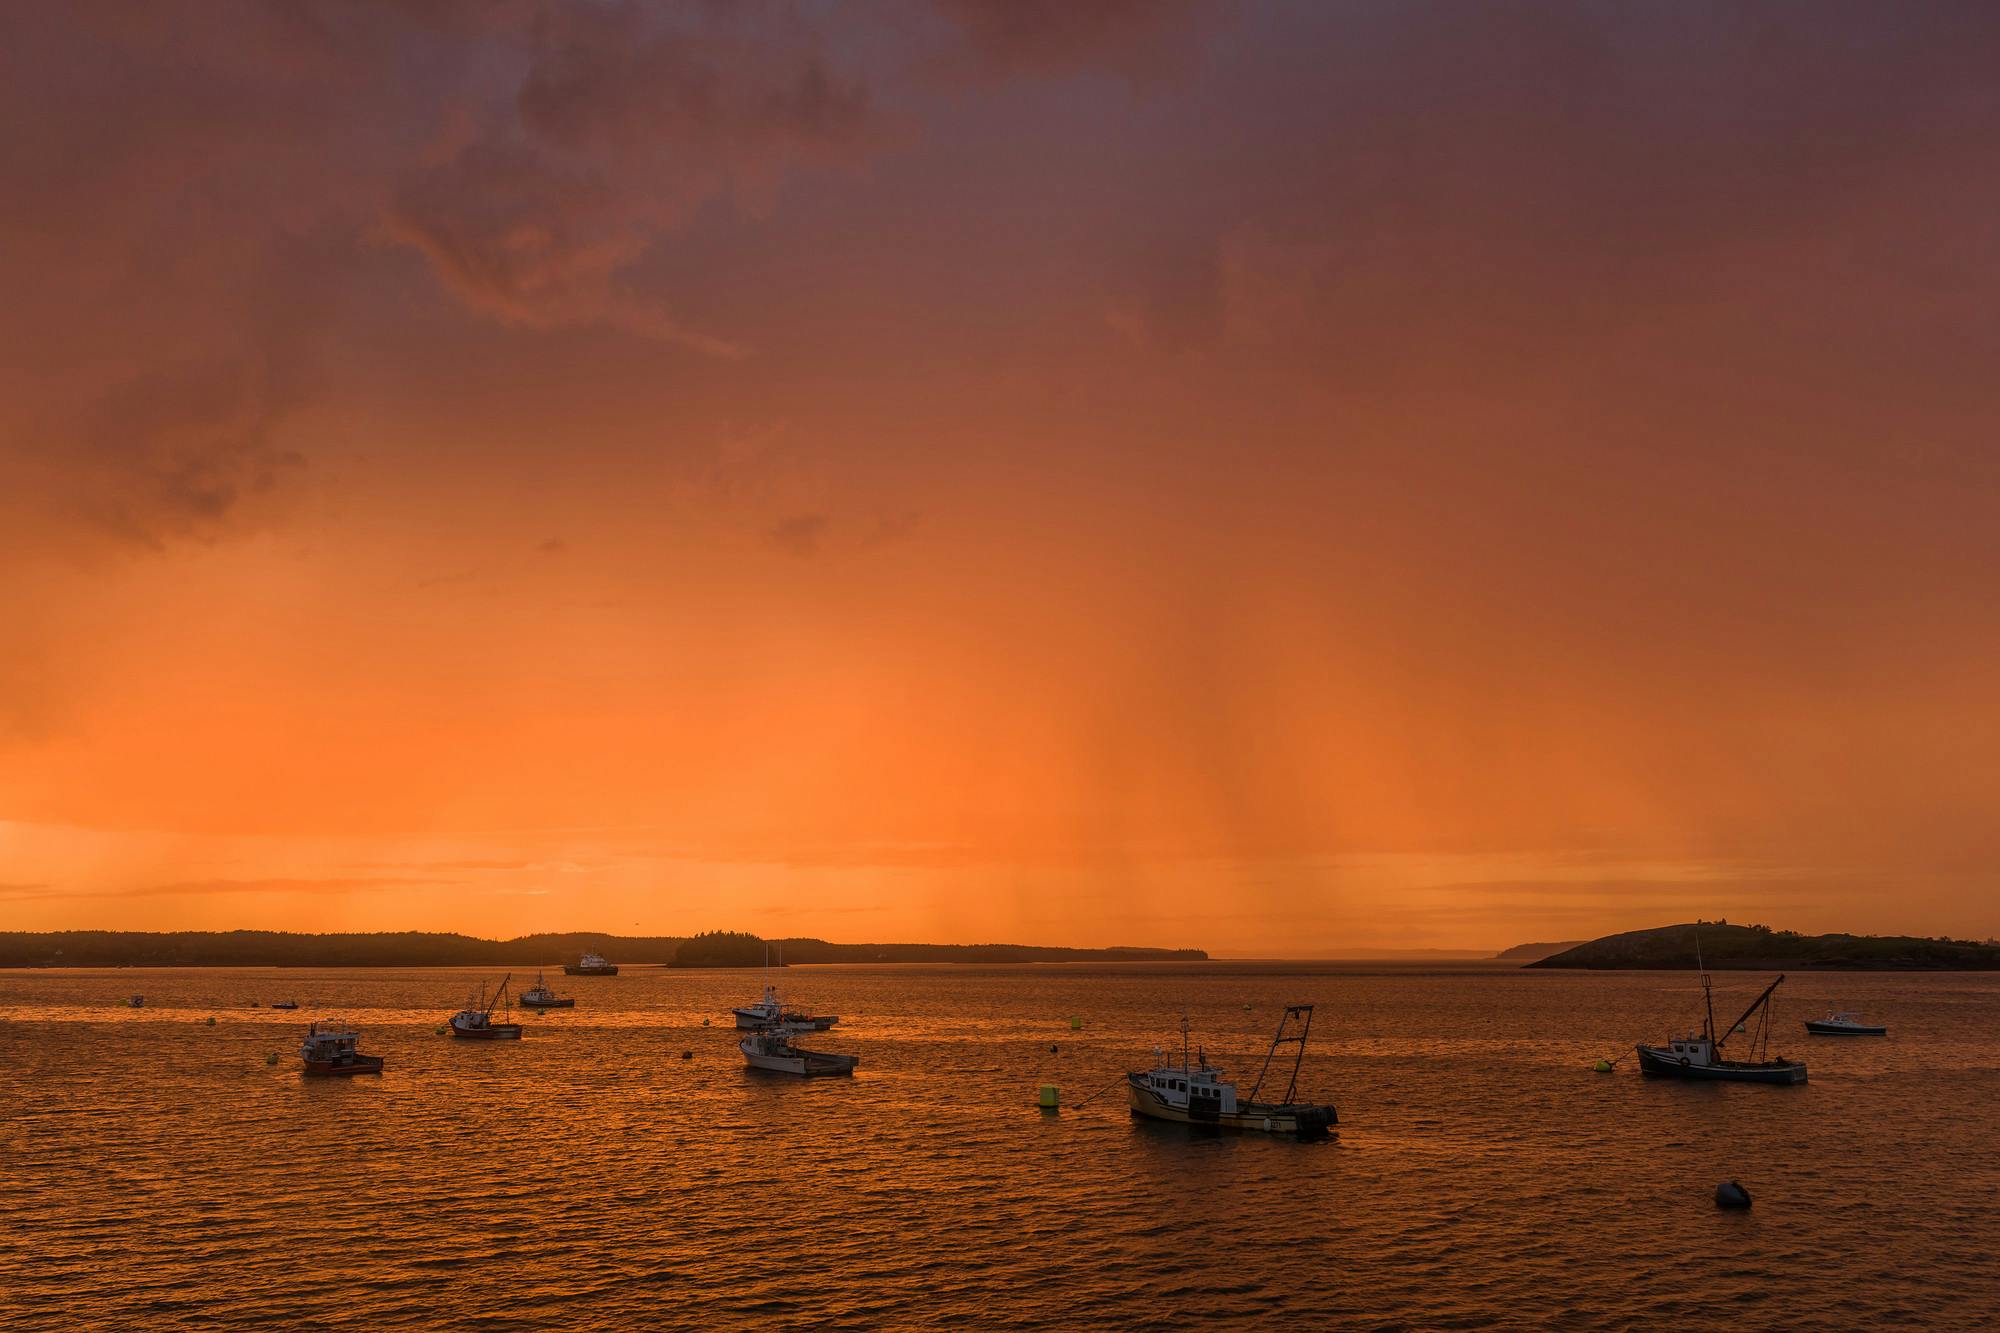 Rainstorm Sunset Over Fishing Boats